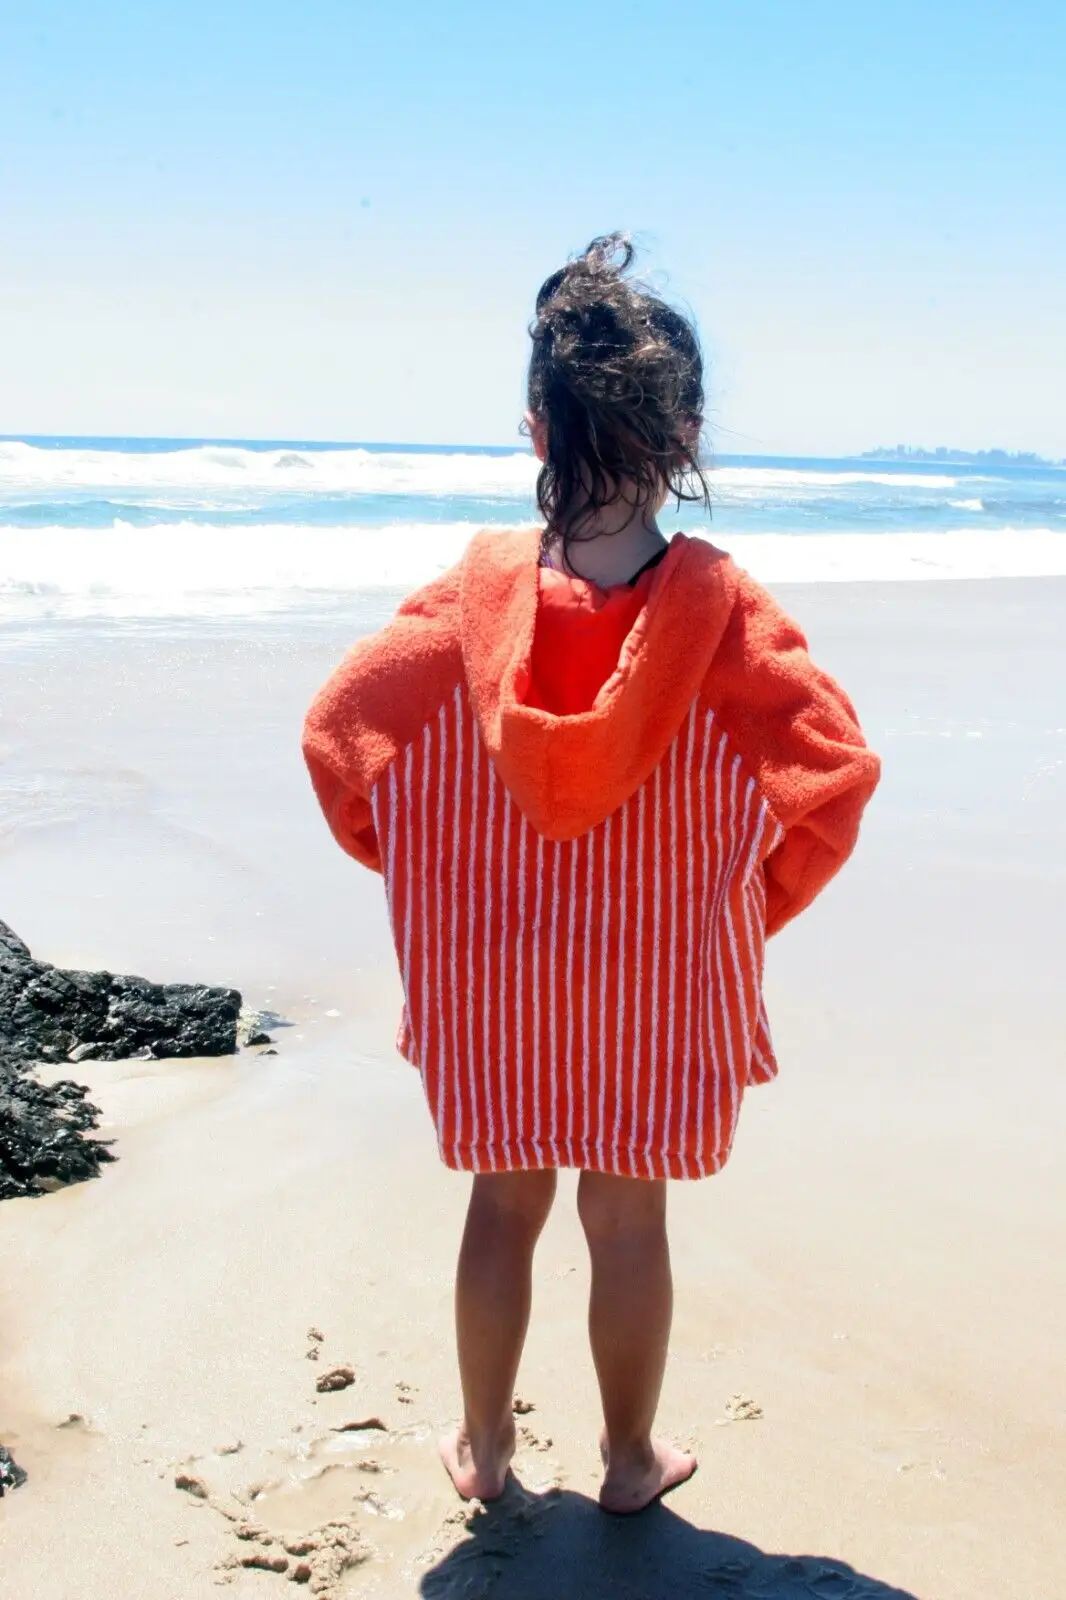 Rot gestreifter Großhandel Bademantel gekämmte Baumwolle Handtuch Poncho Kinder New Style Kinder Zip Up Kapuze Strand tuch